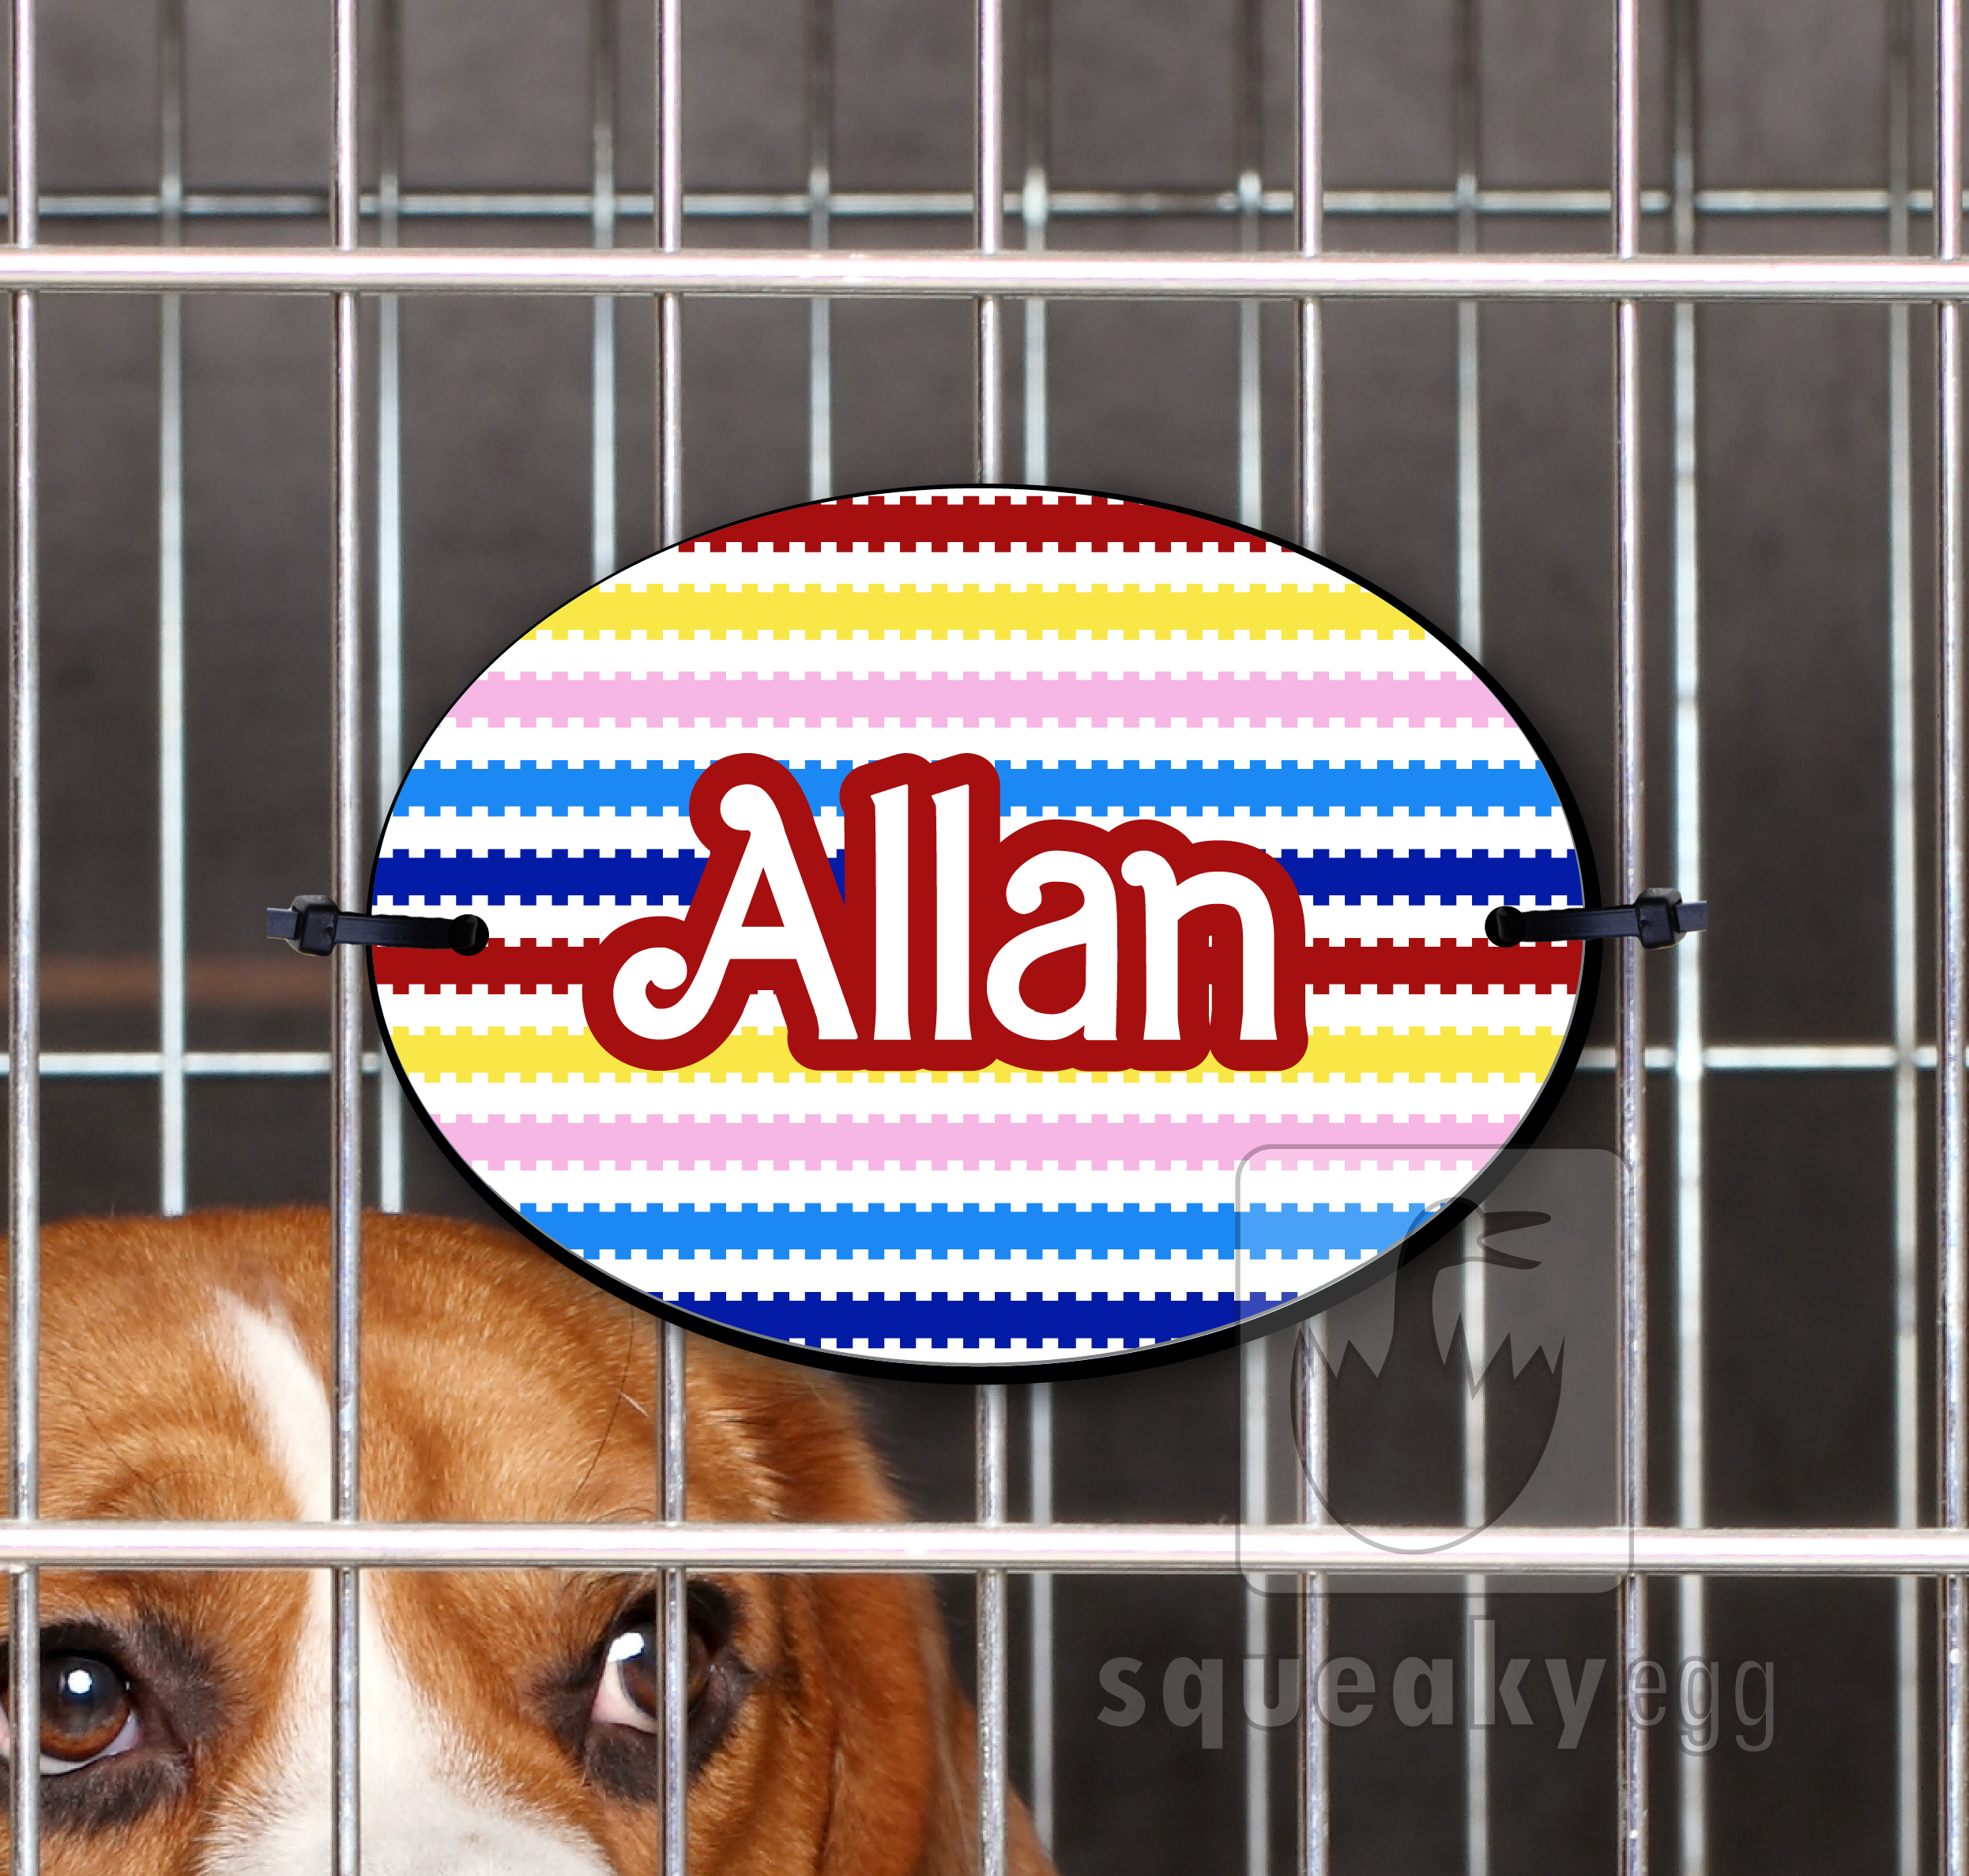 Allan - Crate Tag